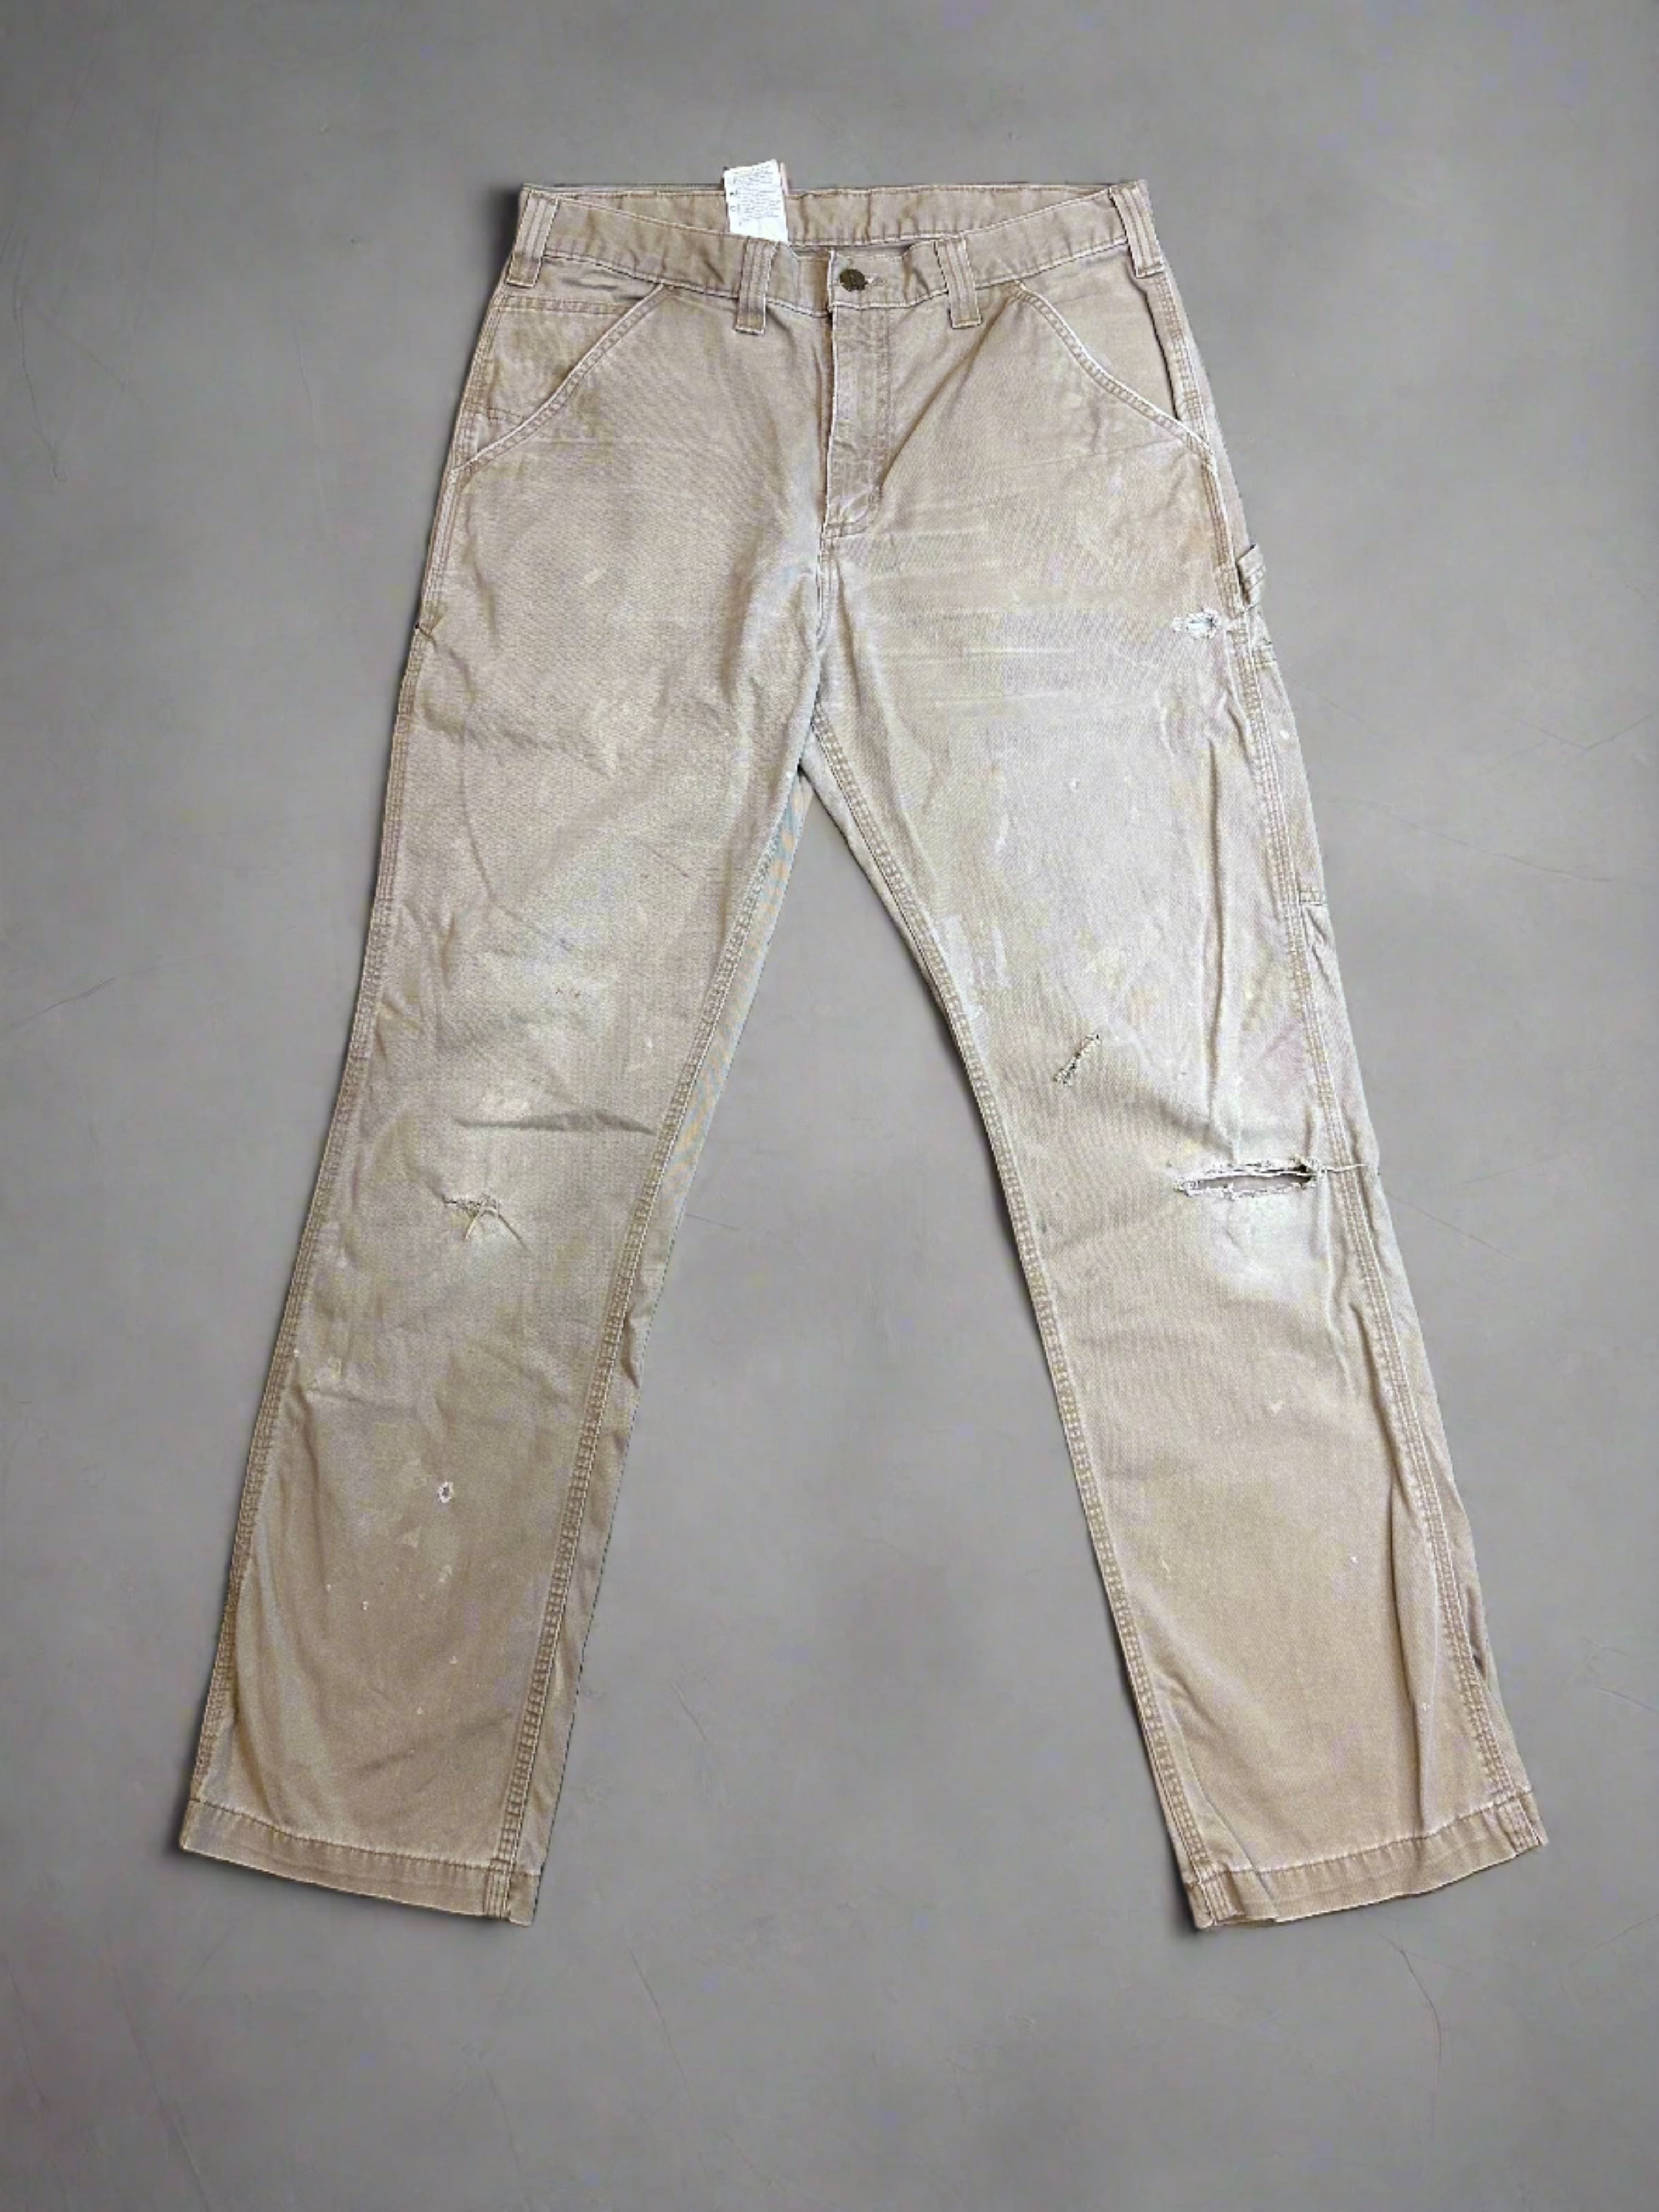 Vintage Carhartt Distressed Pants - size 33x32